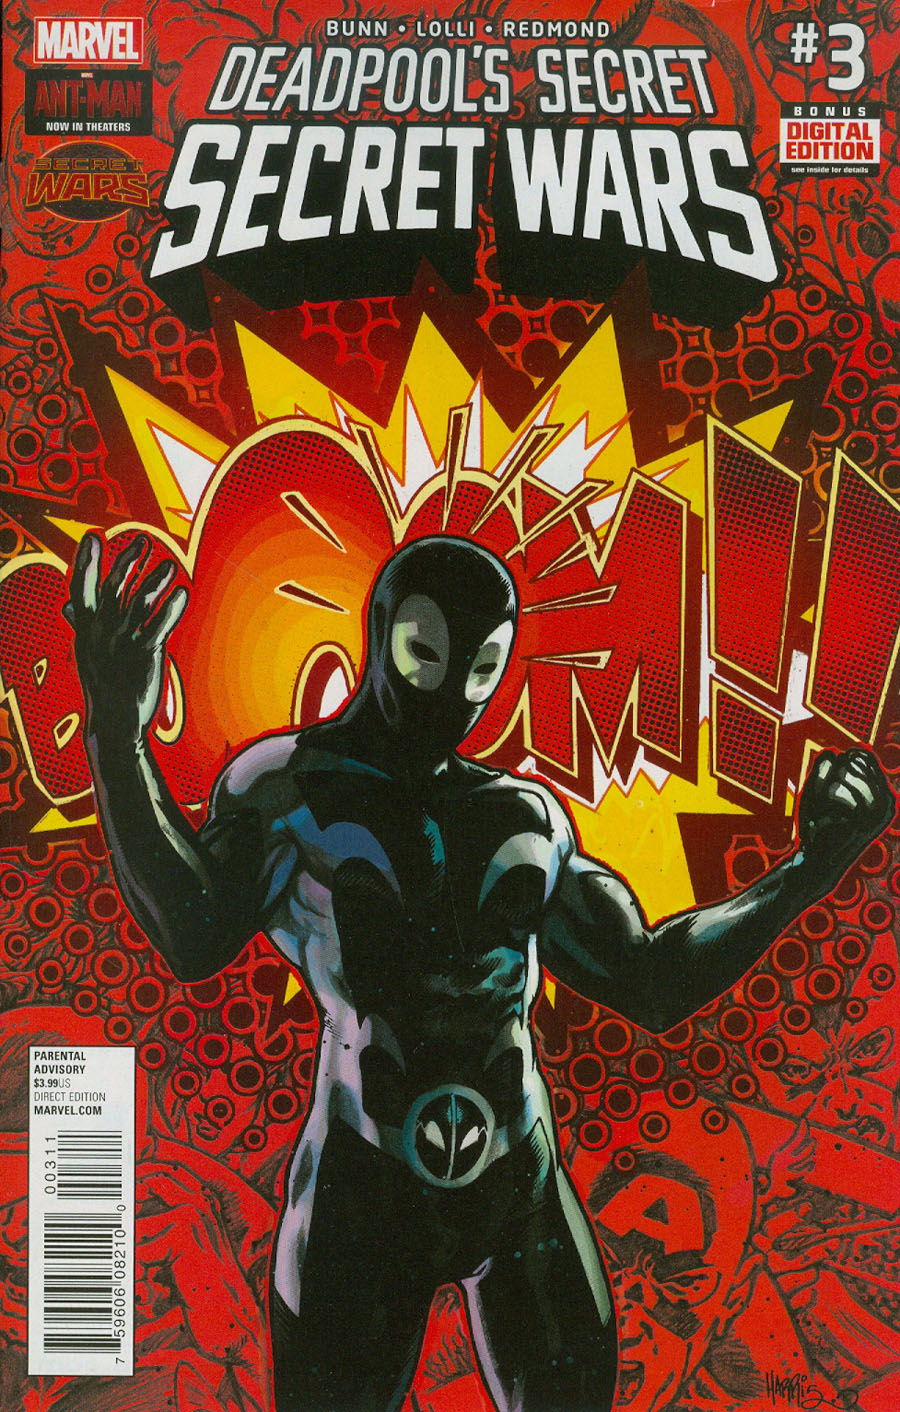 Deadpools Secret Secret Wars #3 Cover A Regular Tony Harris Cover (Secret Wars Warzones Tie-In)